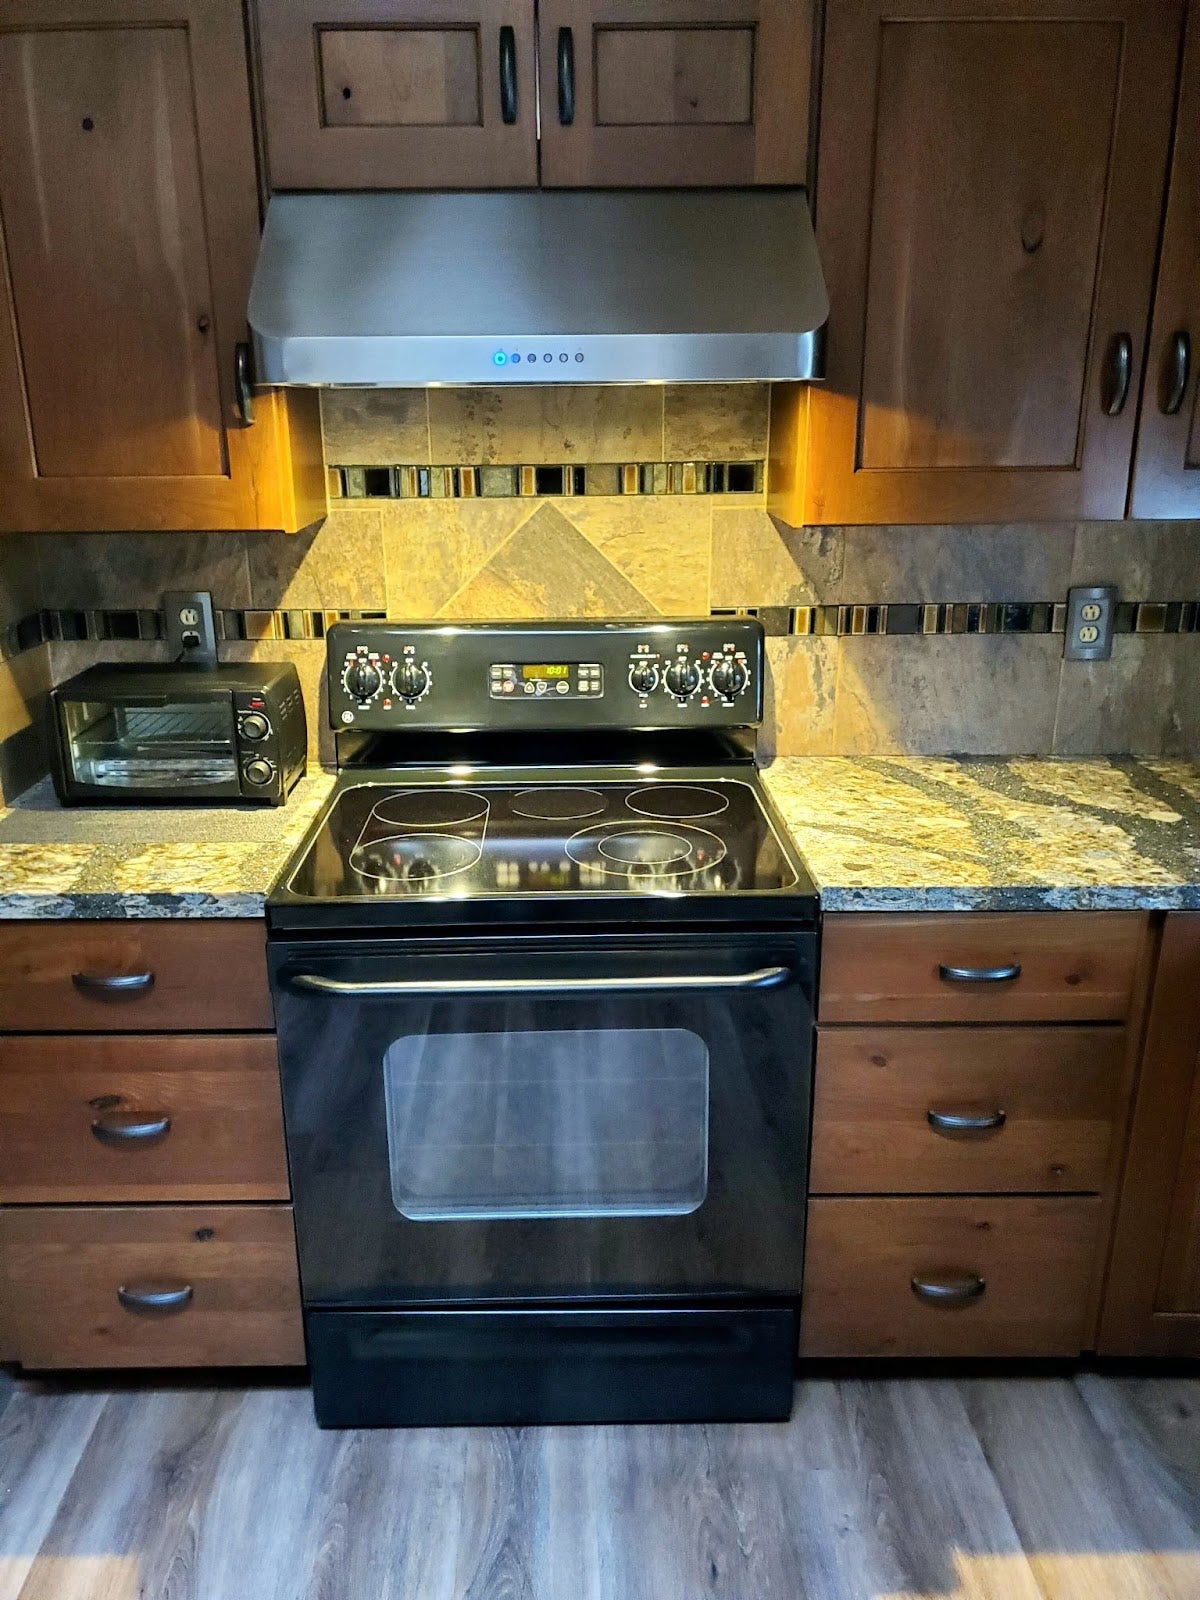 Modern kitchen with Proline range hood, white cabinets, and black granite countertops. - Proline Range Hoods - prolinerangehoods.com 